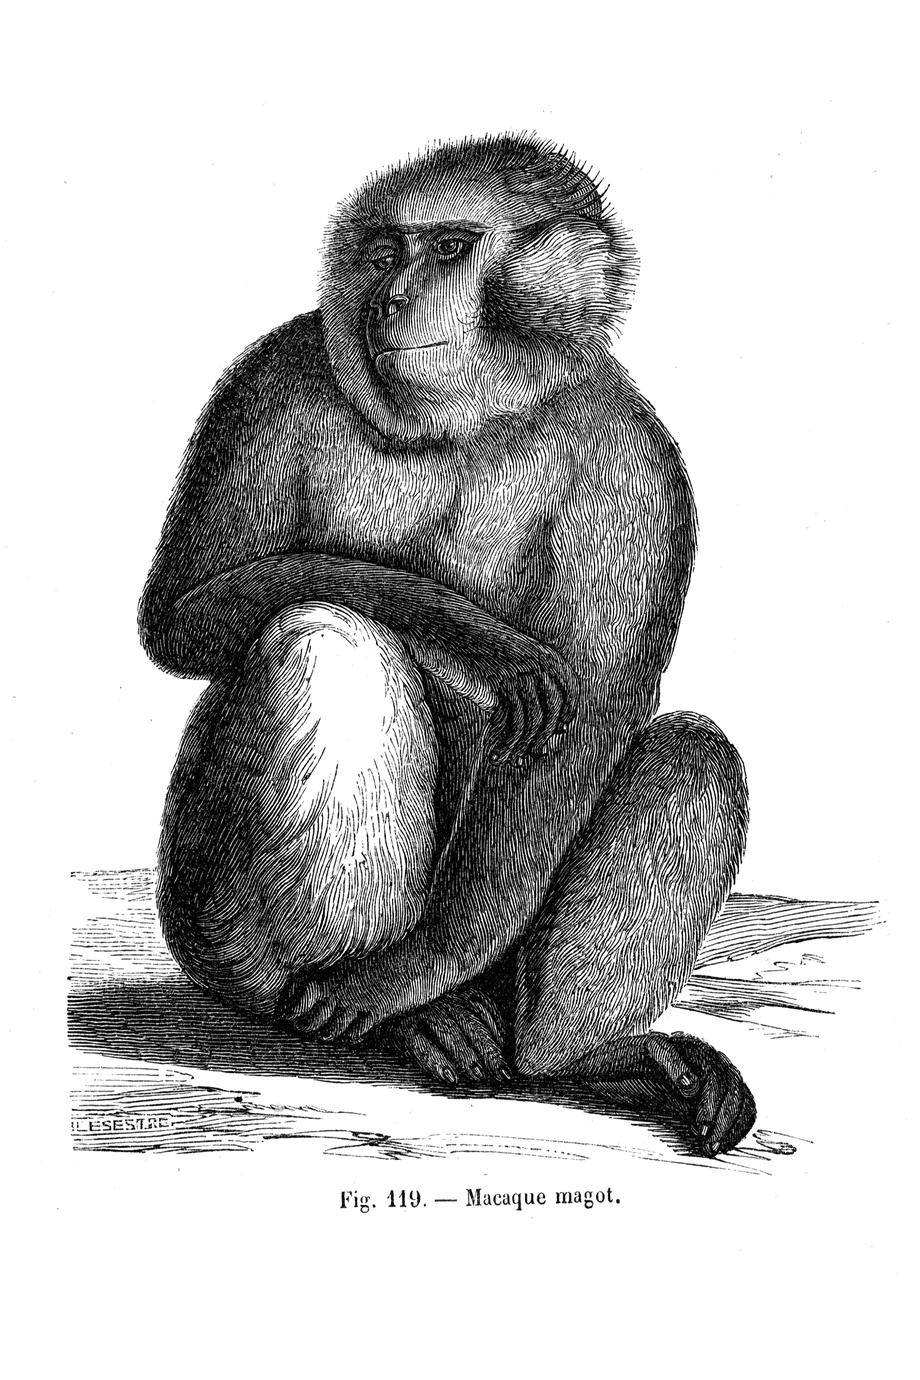 Macaque magot